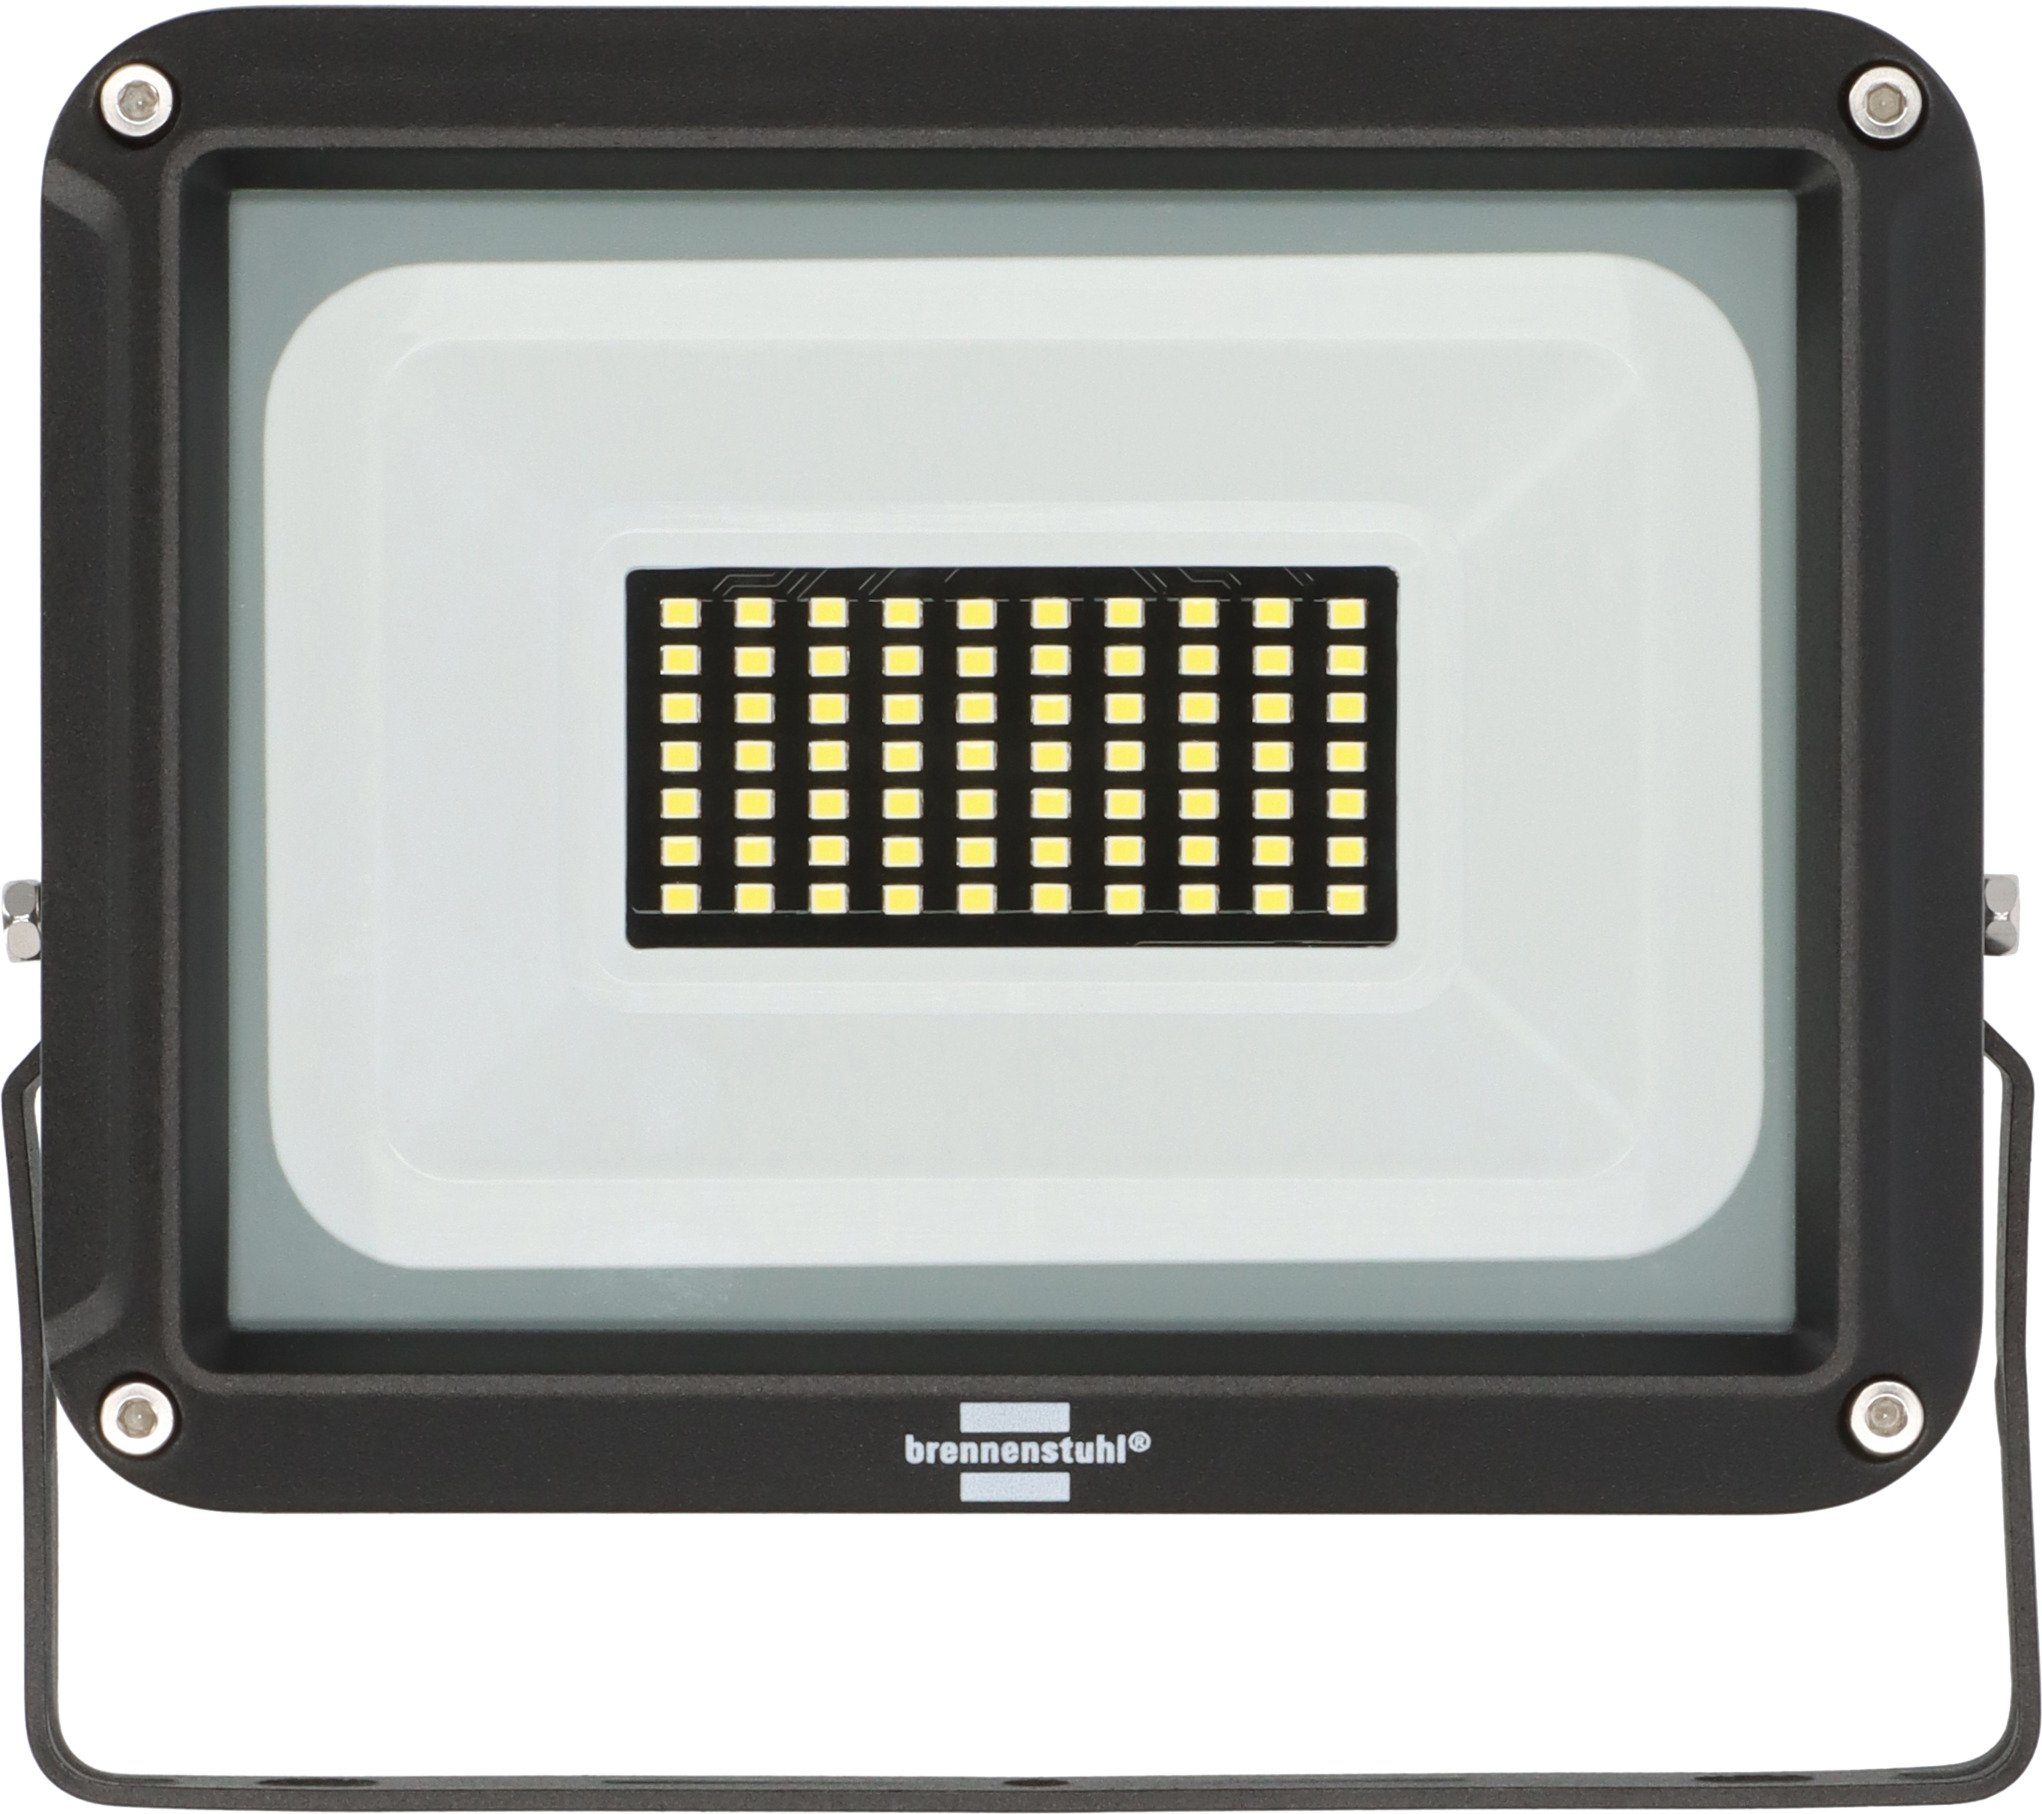 Brennenstuhl Wandstrahler 4060, LED JARO LED IP65 fest außen 3450lm integriert, aus LED-Fluter Aluminium, für